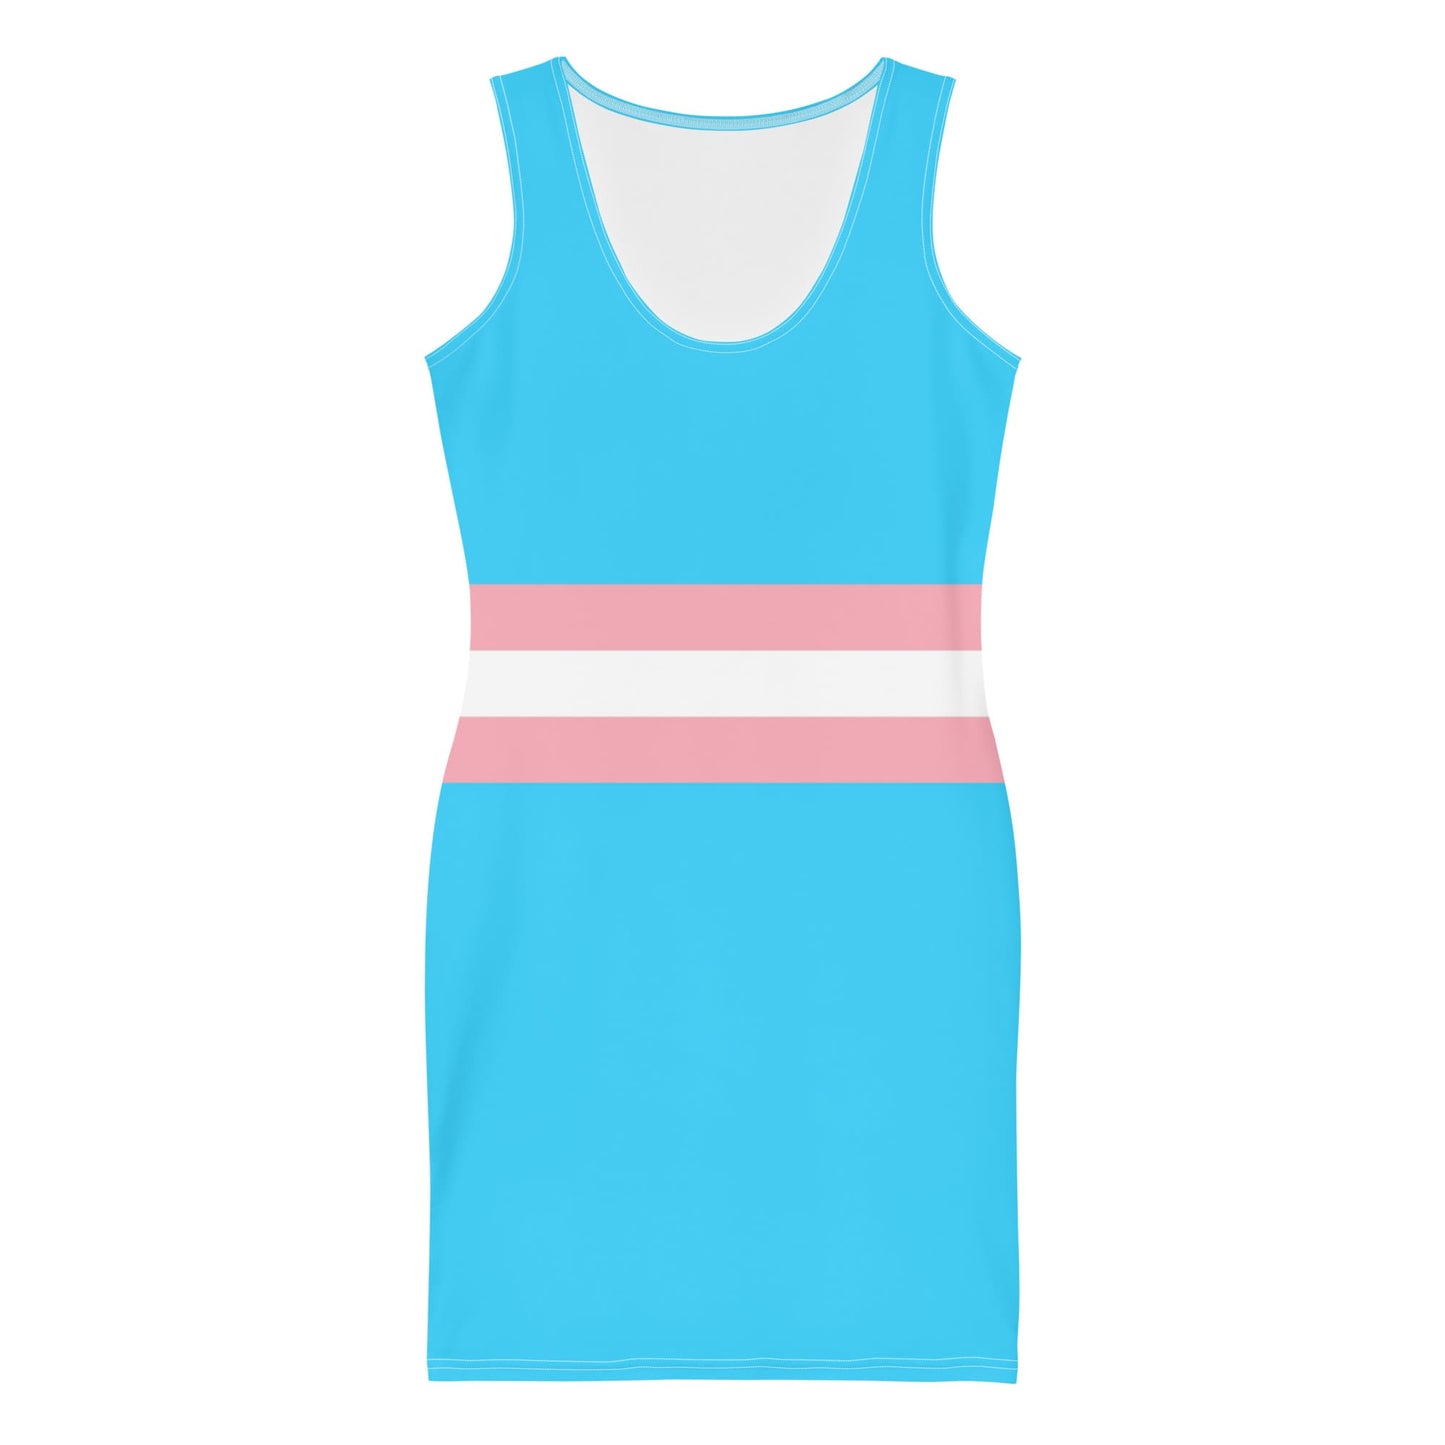 Transgender dress, flatlay front